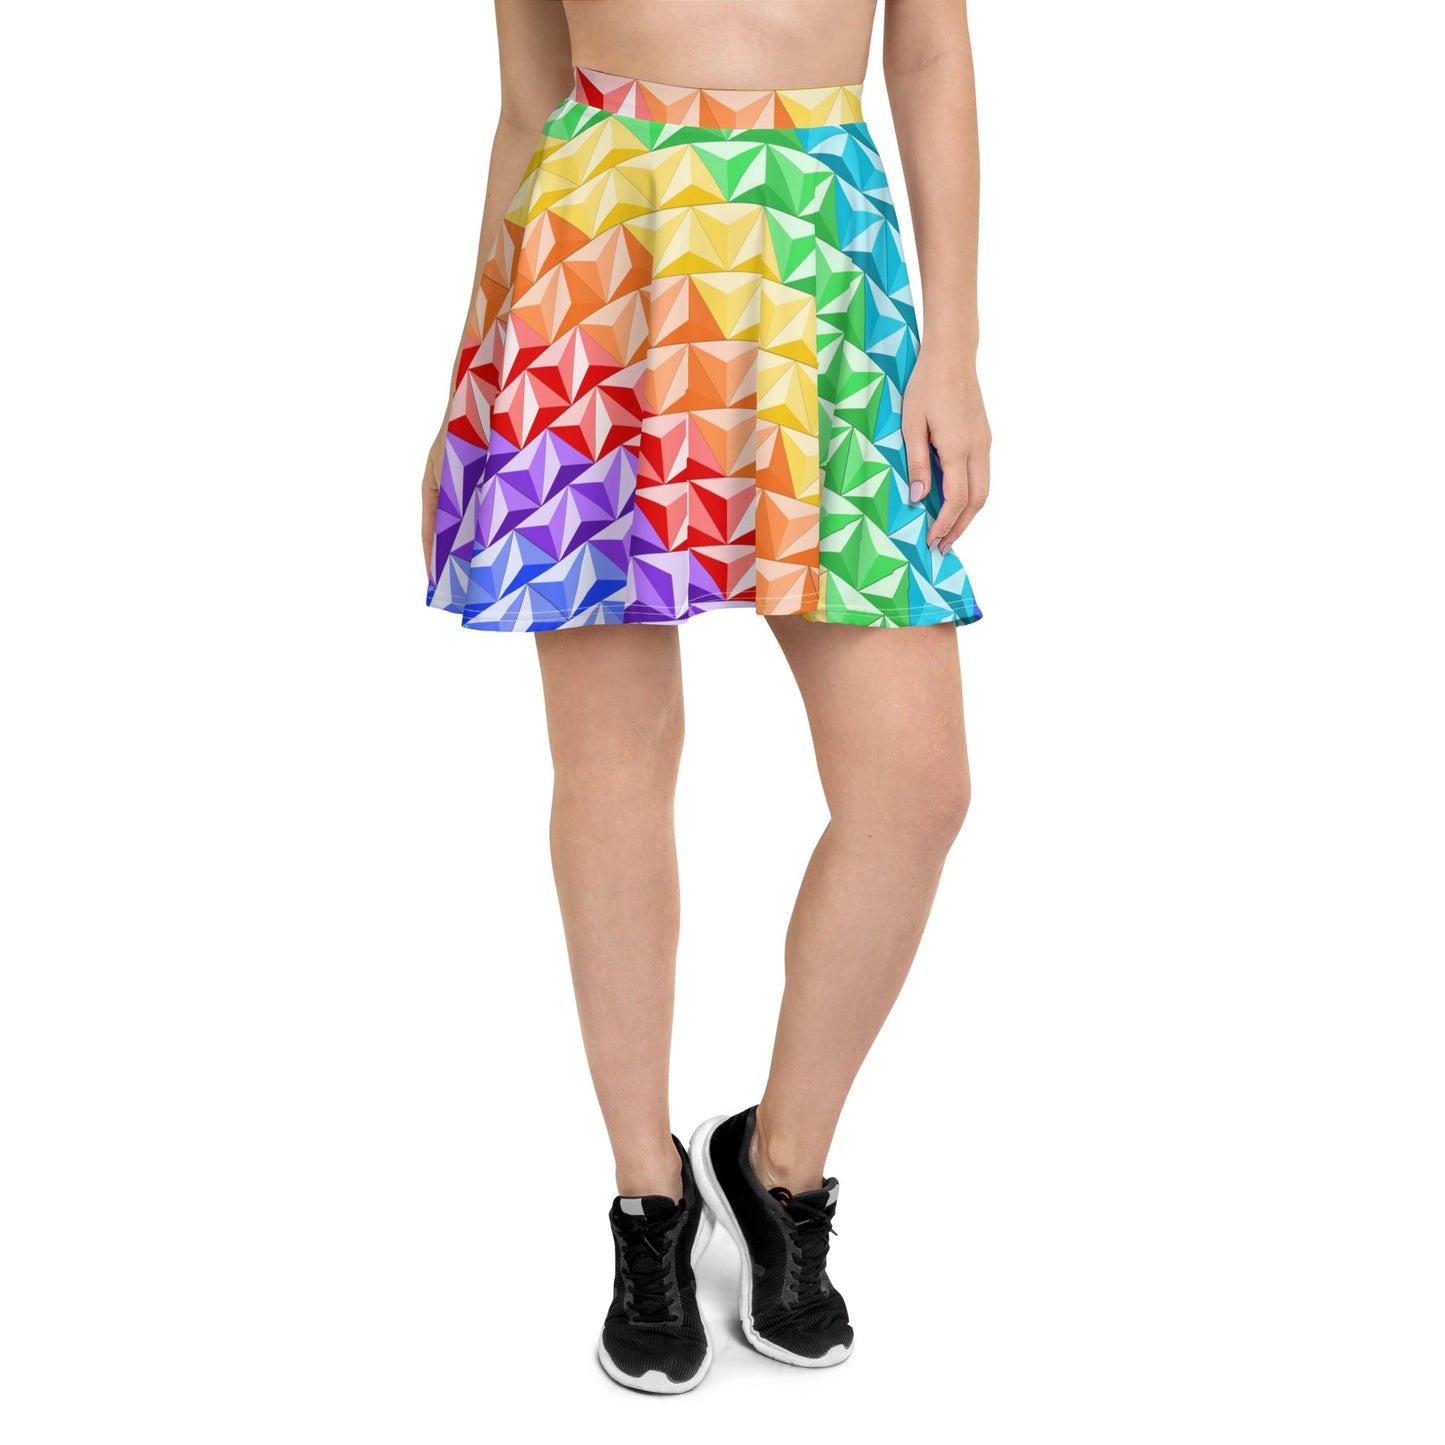 Rainbow World of Tomorrow Skater Skirt active wearcalifornia adventureclothing#tag4##tag5##tag6#